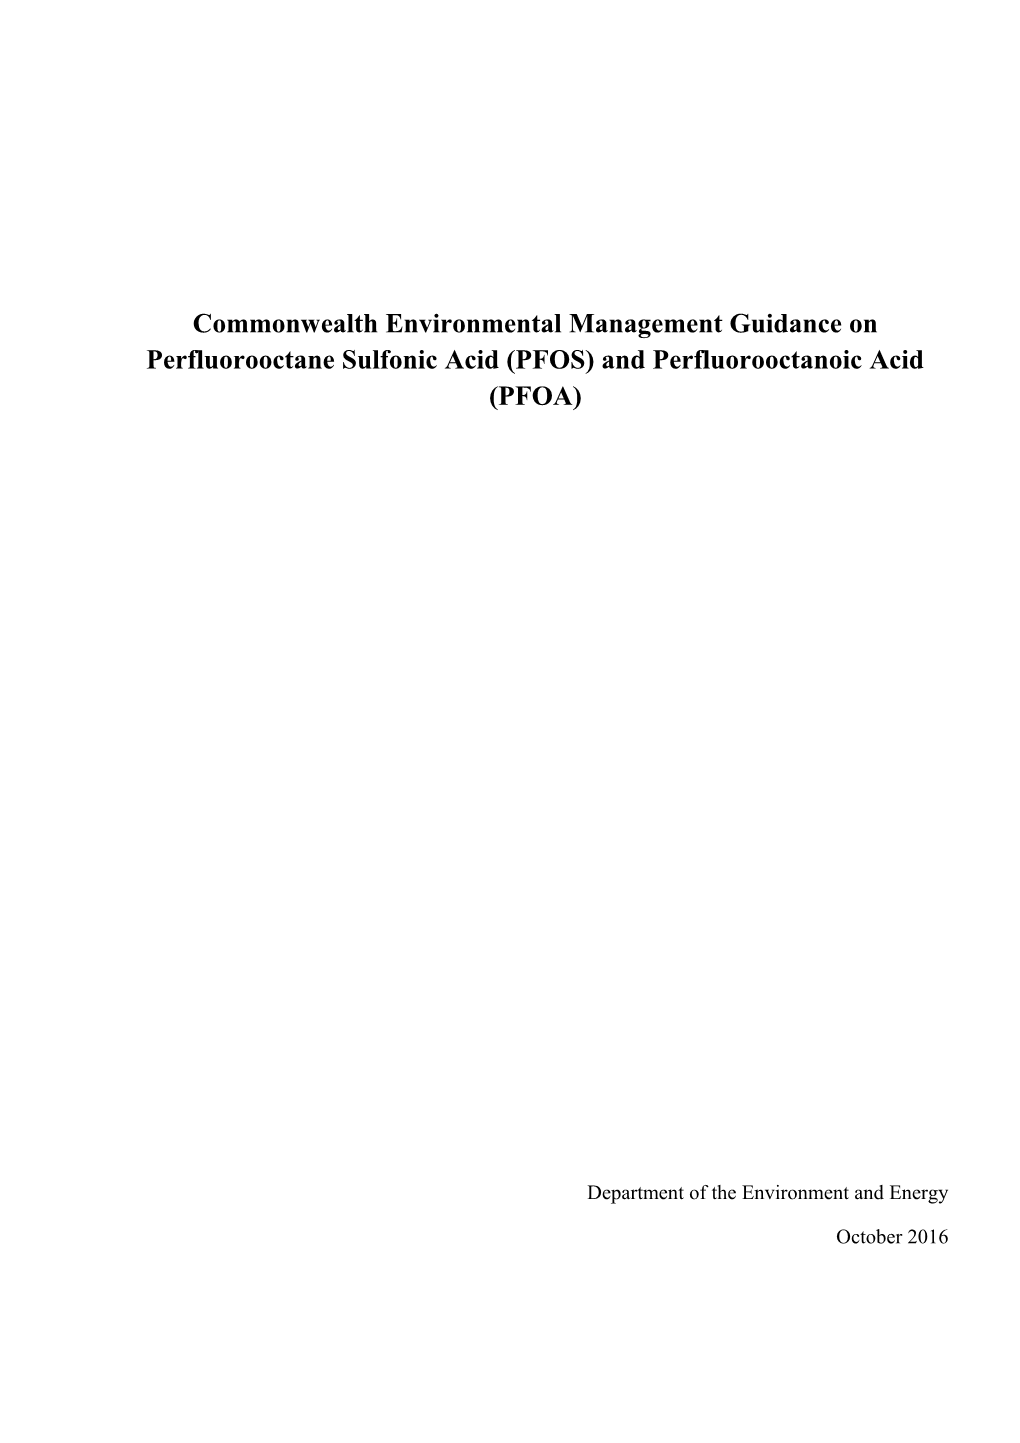 Commonwealth Environmental Management Guidance on Perfluorooctane Sulfonic Acid (PFOS)